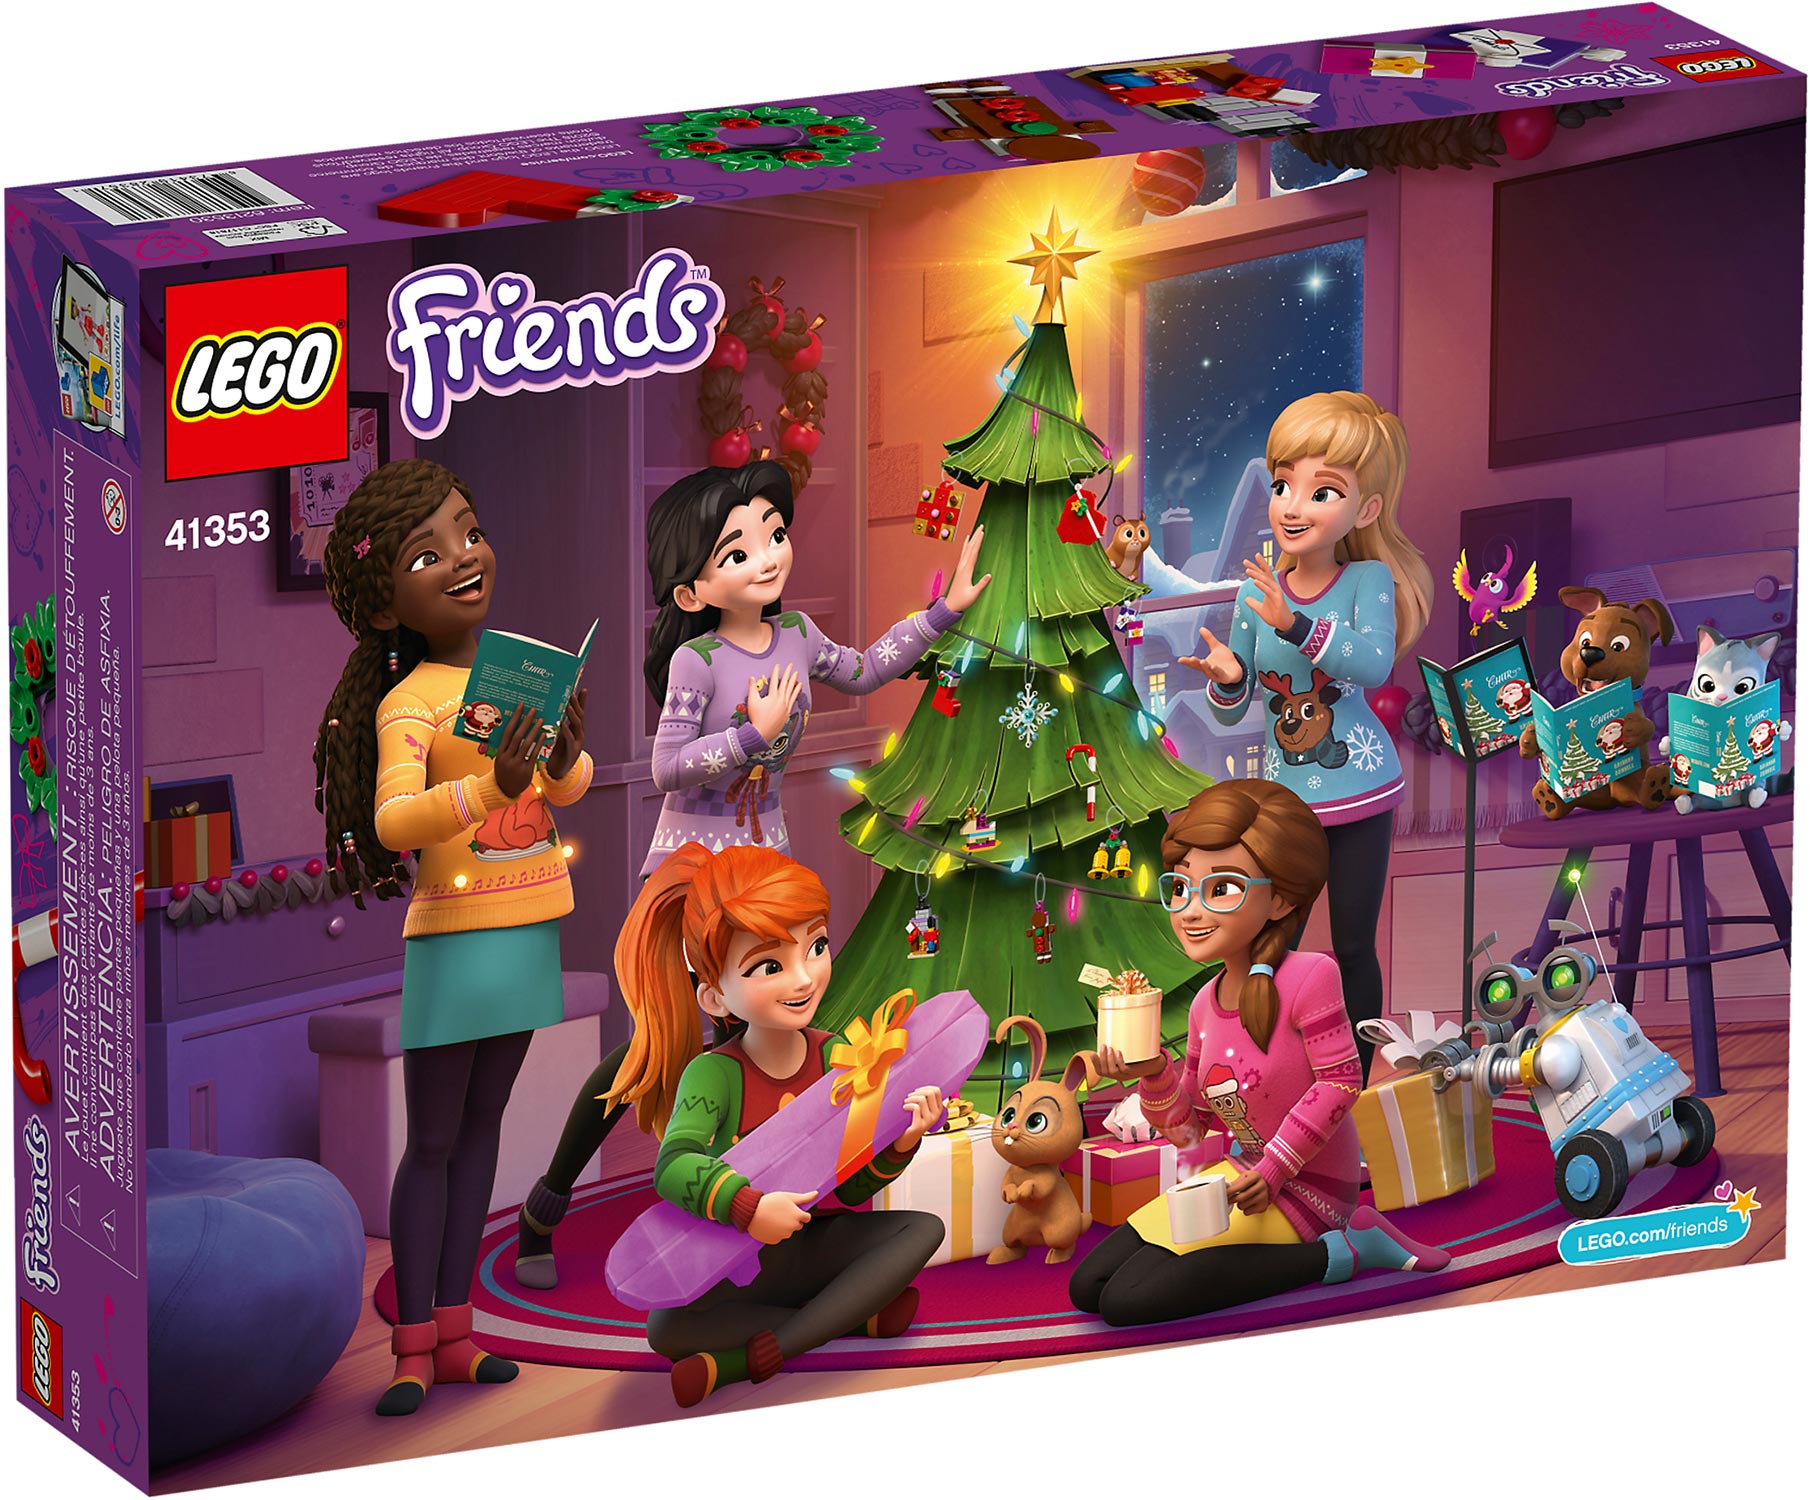 LEGO Friends Calendar 2018